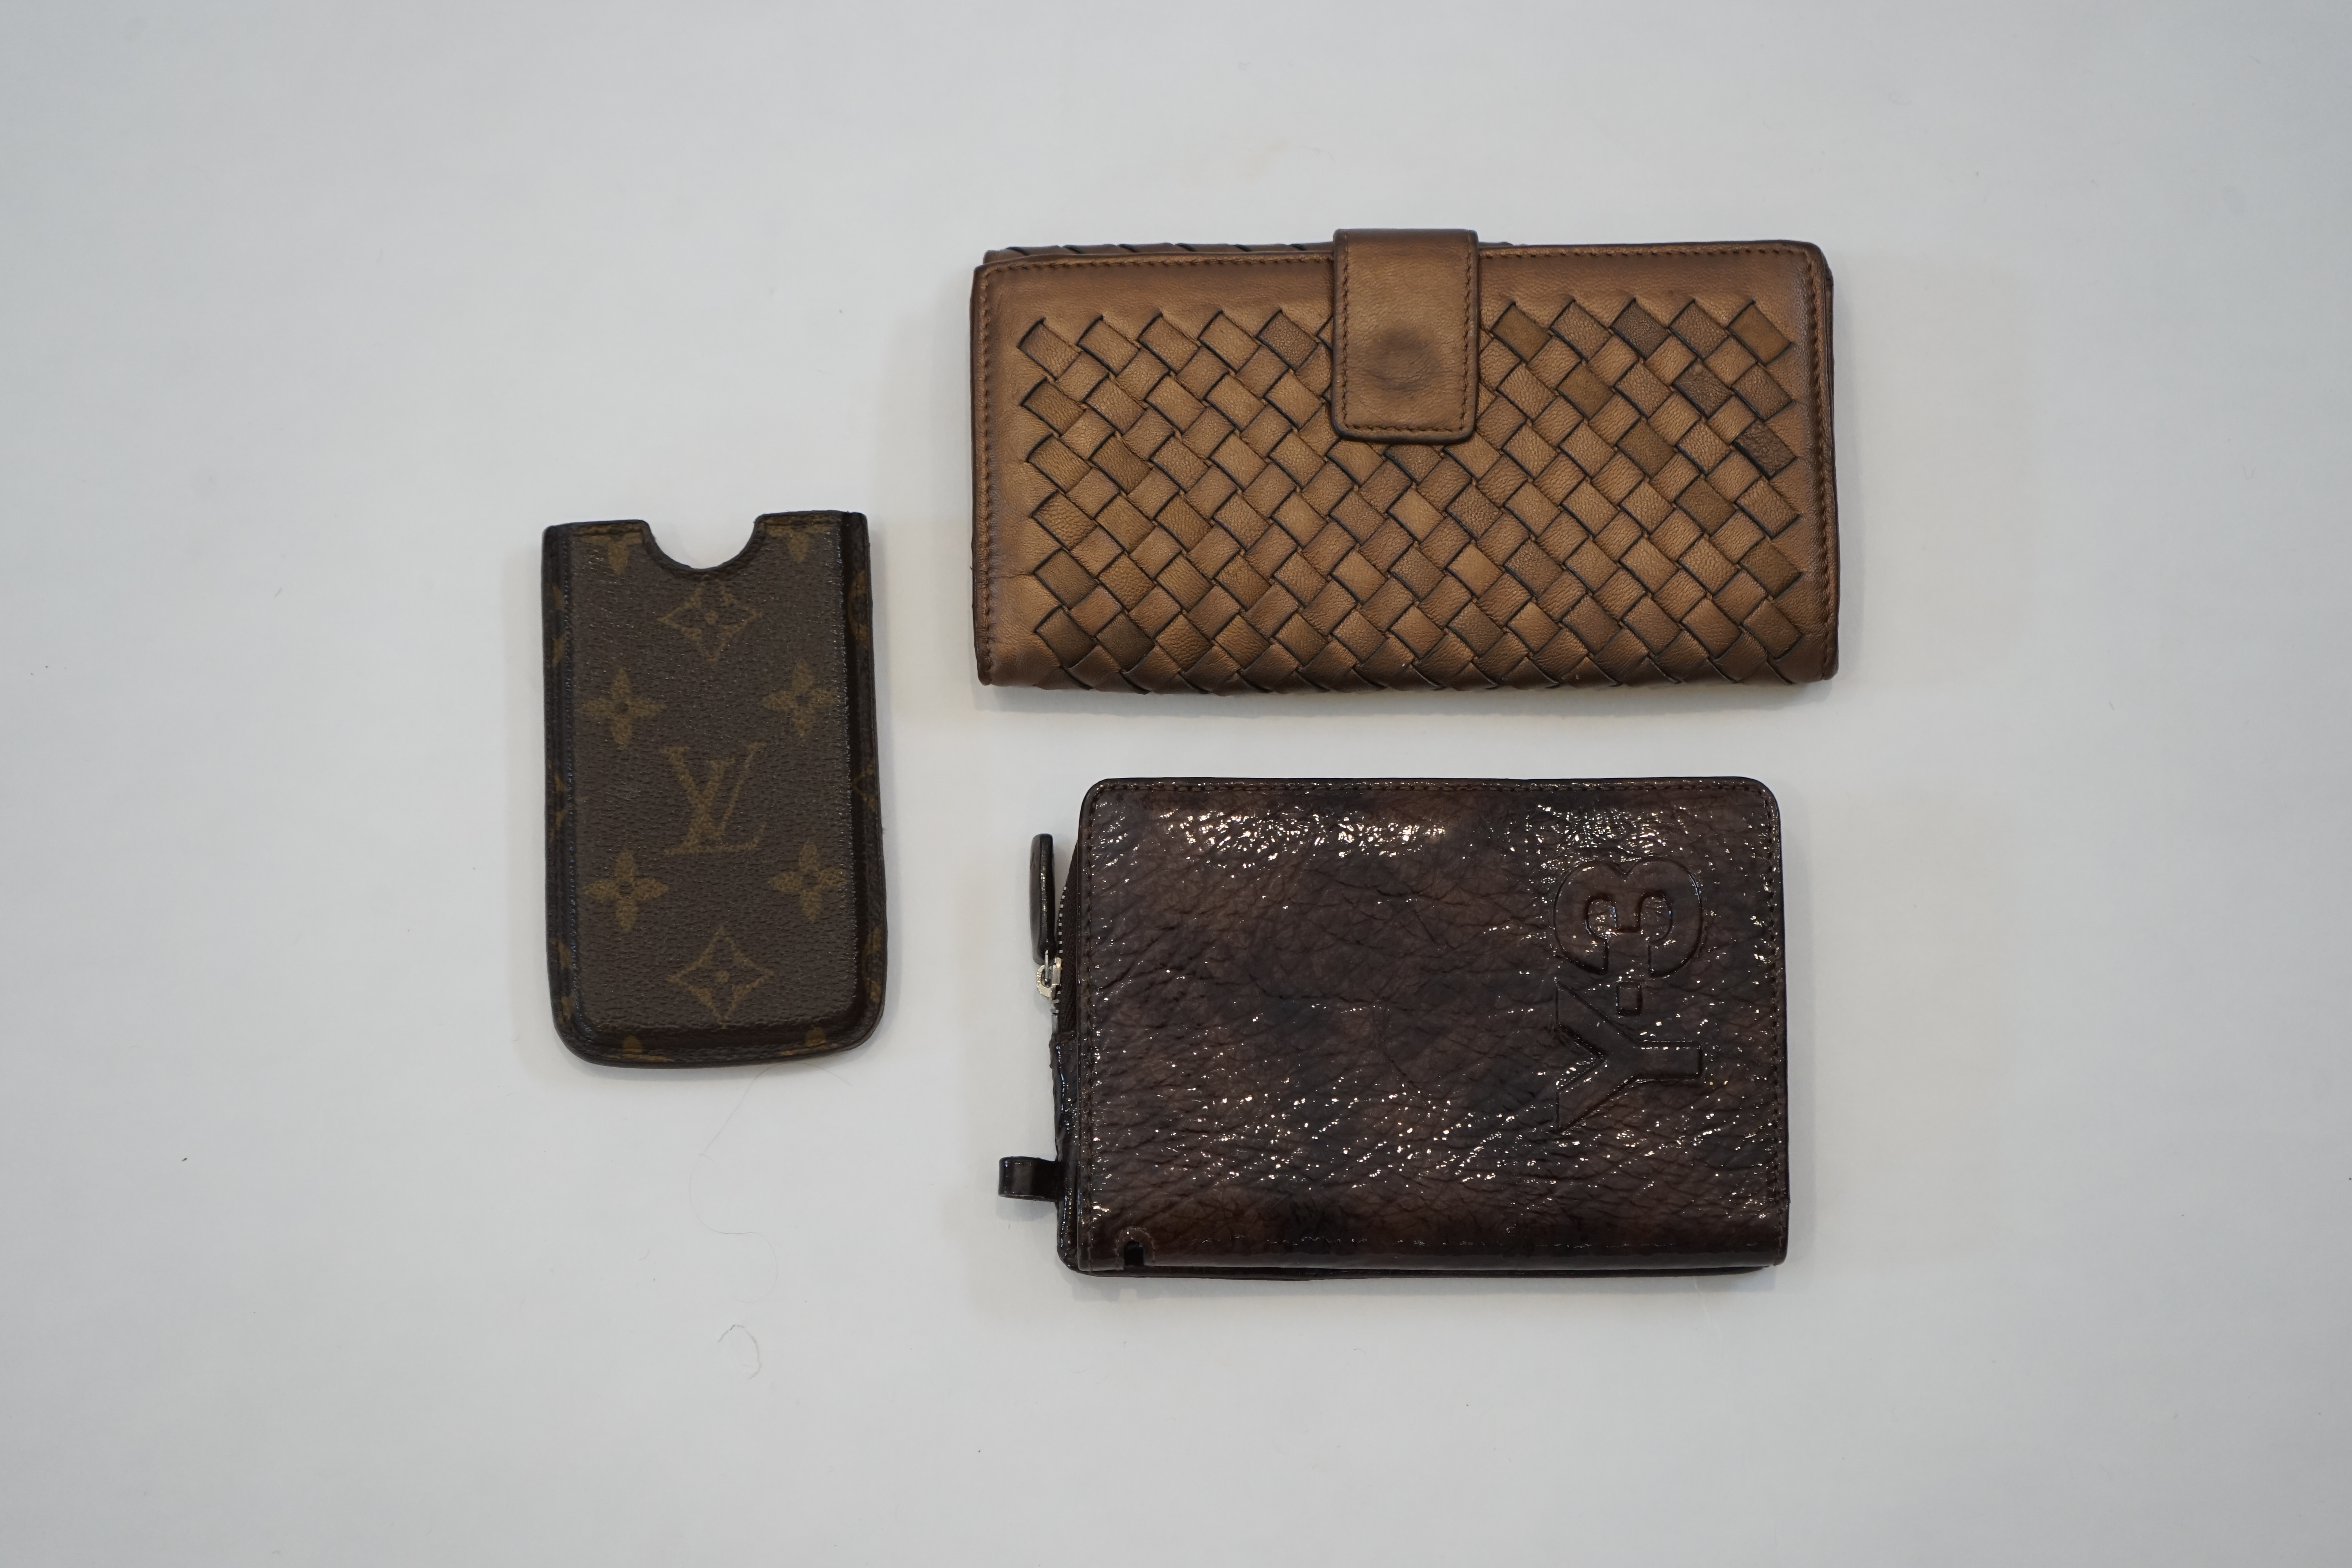 A Bottega Veneta purse, a Y-3 purse/wallet and a Louis Vuitton phone case